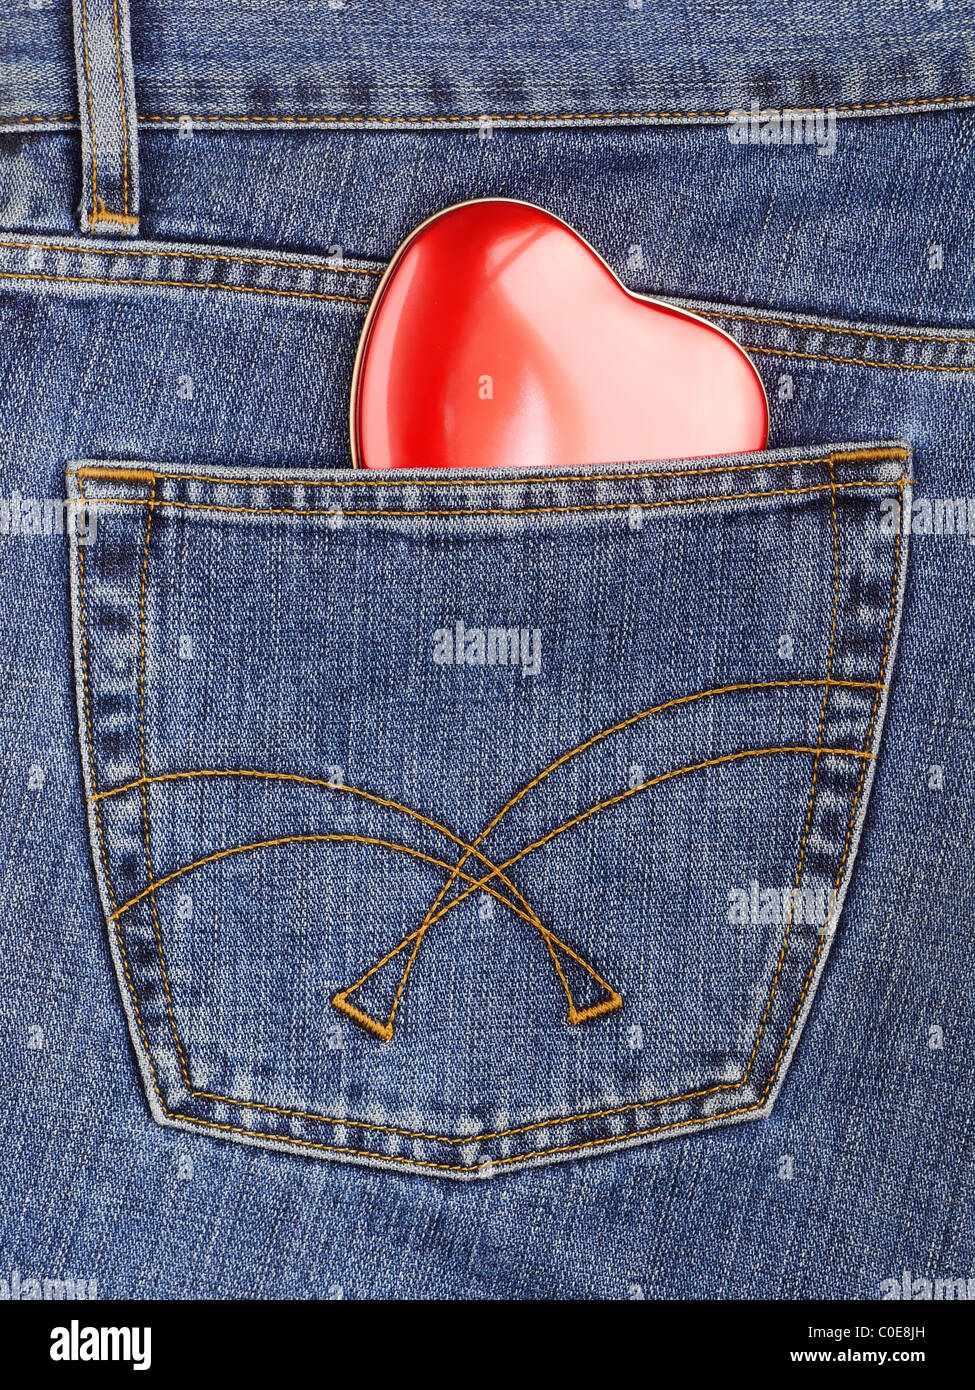 Corazón rojo sobresalen de blue jeans bolsillo posterior. Foto de stock